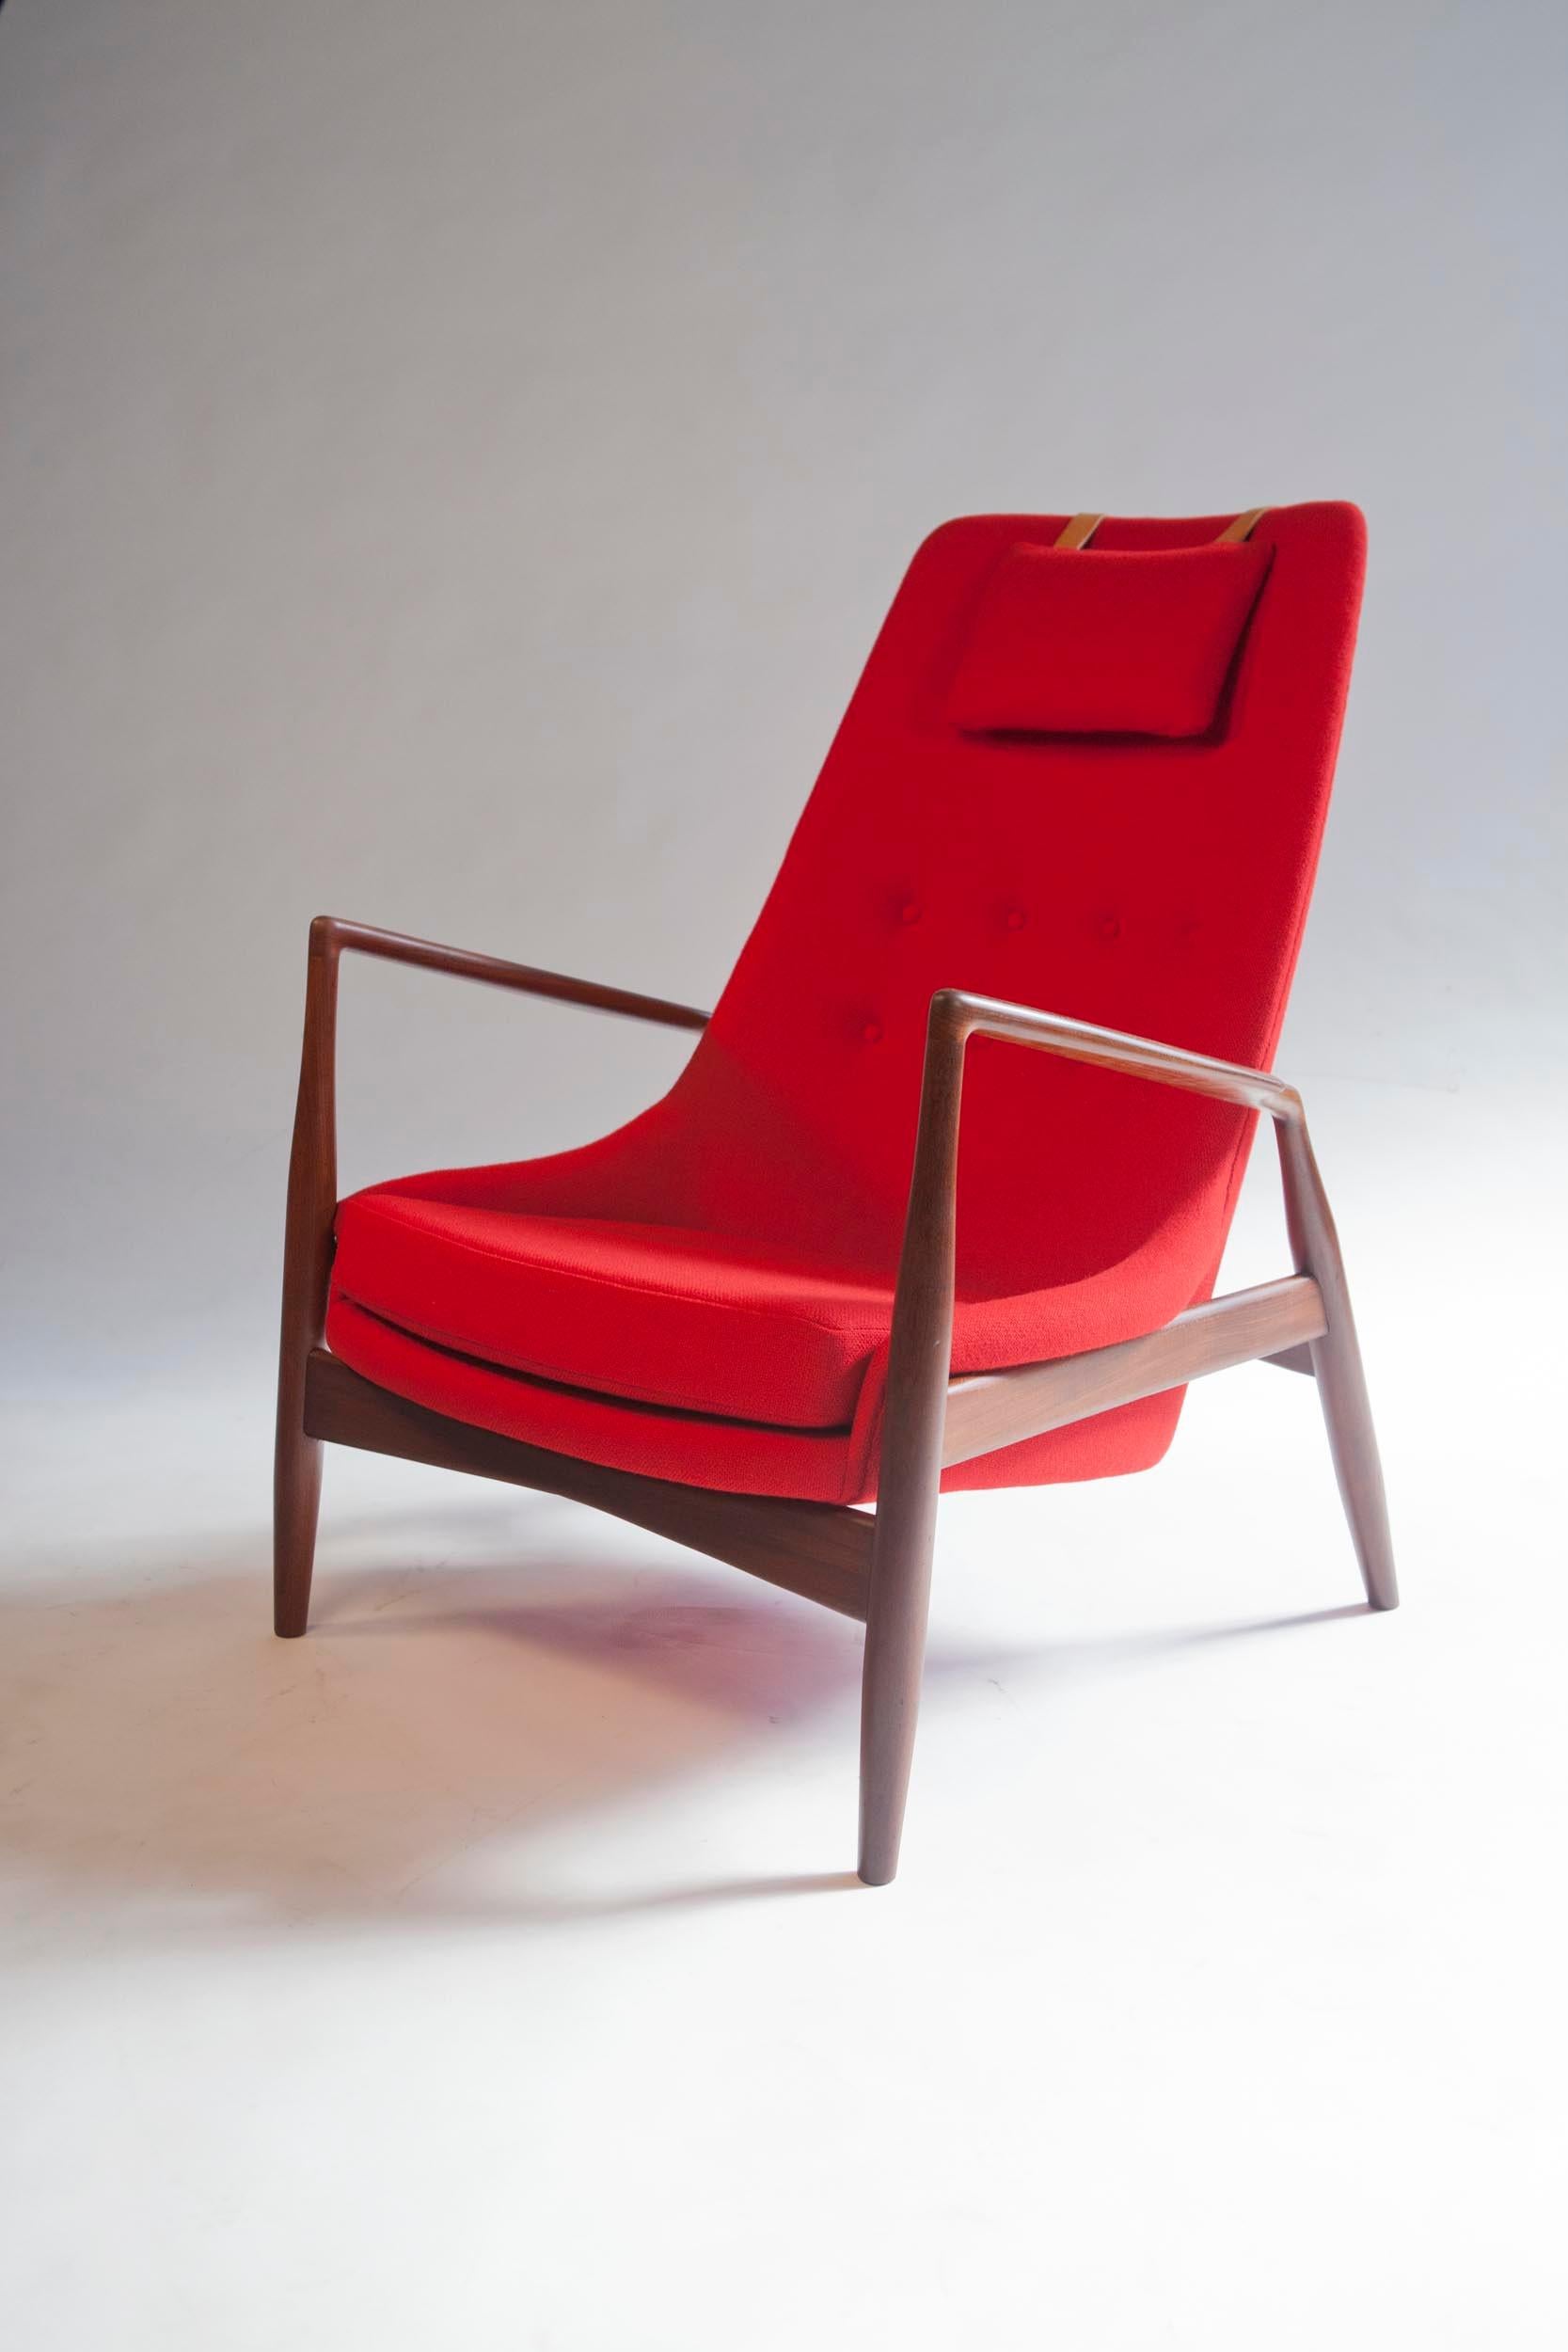 Ib Kofod-Larsen high back seal chair in Afrormosia teak and in bright red Maharam Halliingdal for OPE, Sweden, 1960s.

Ib Kofod-Larsen's beautiful 